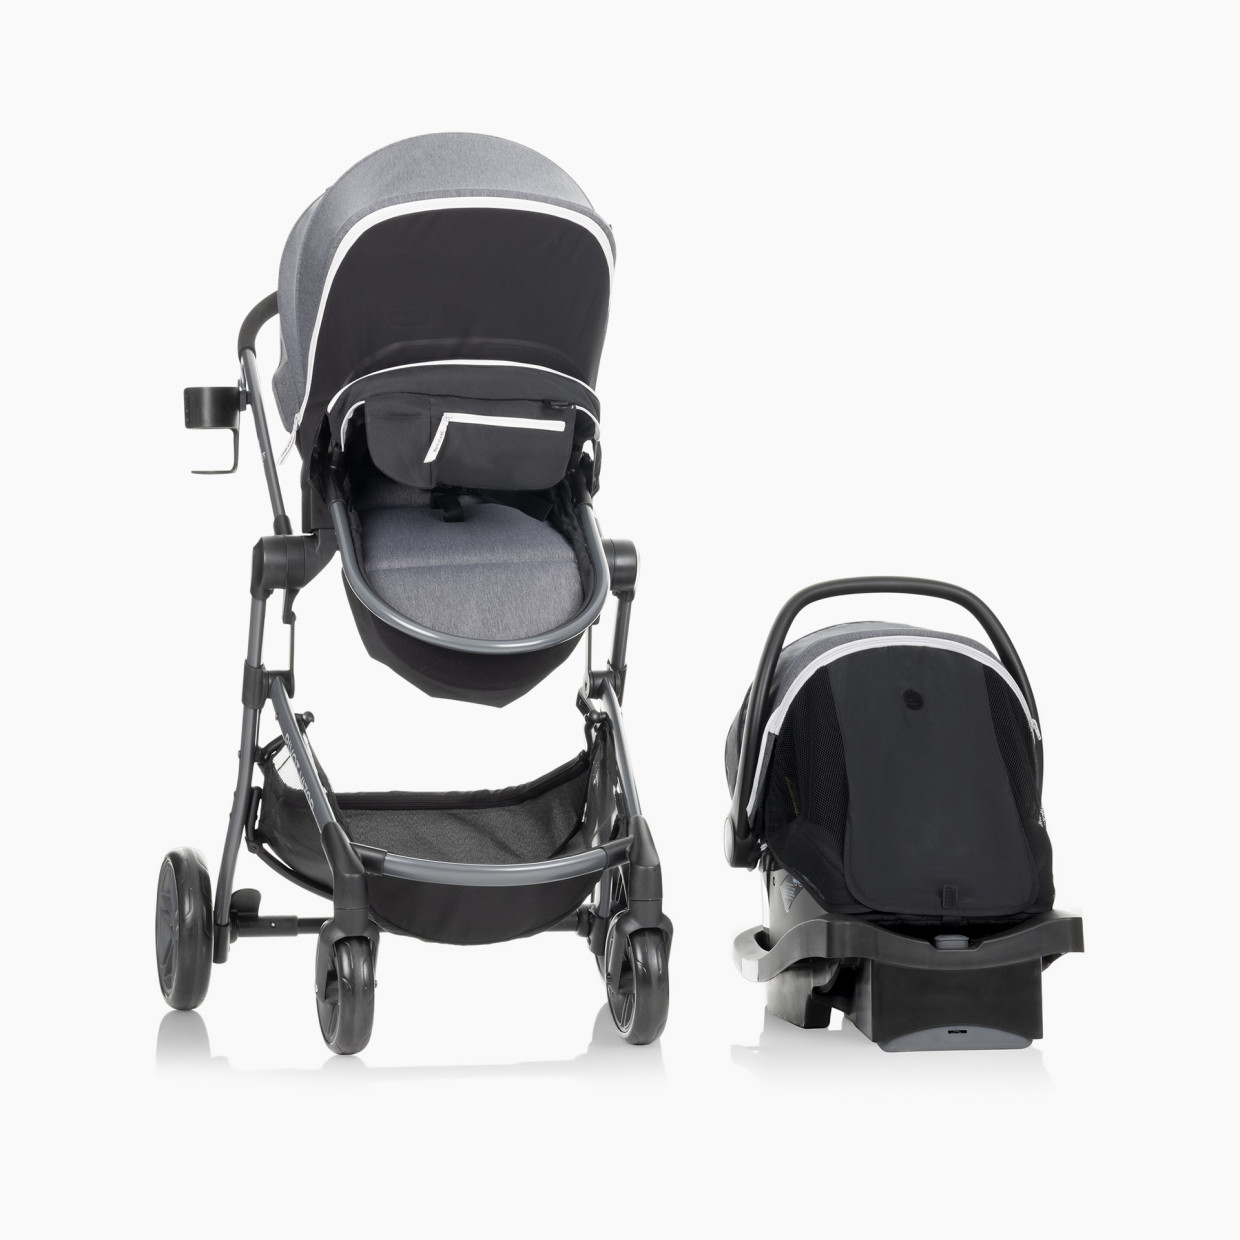 Evenflo Pivot Vizor Travel System with LiteMax Infant Car Seat - Chasse Black.